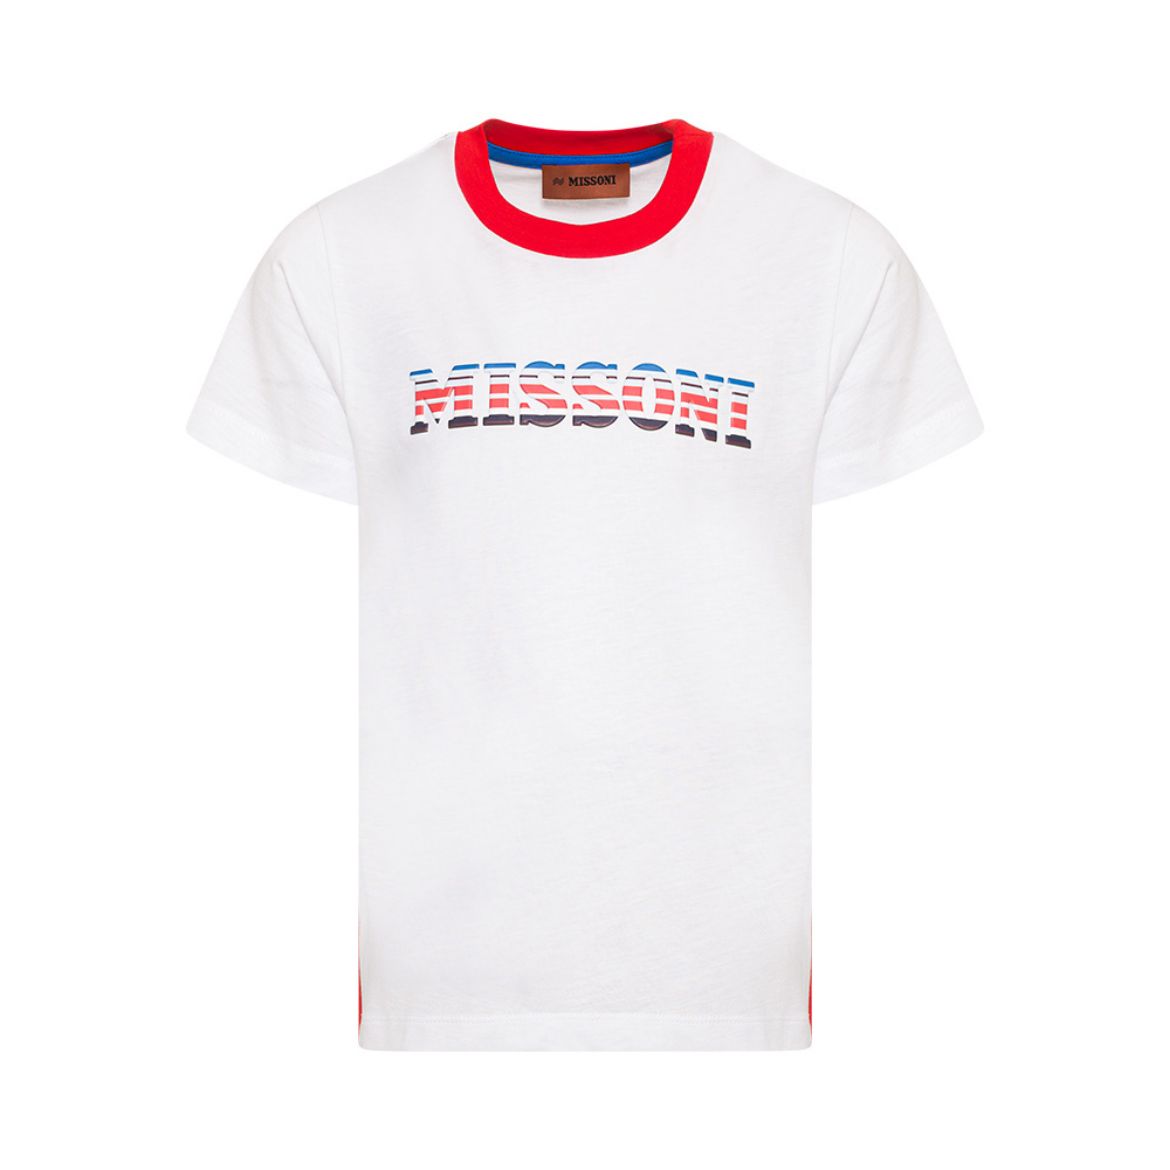 Picture of Missoni Boys White Logo T-Shirt